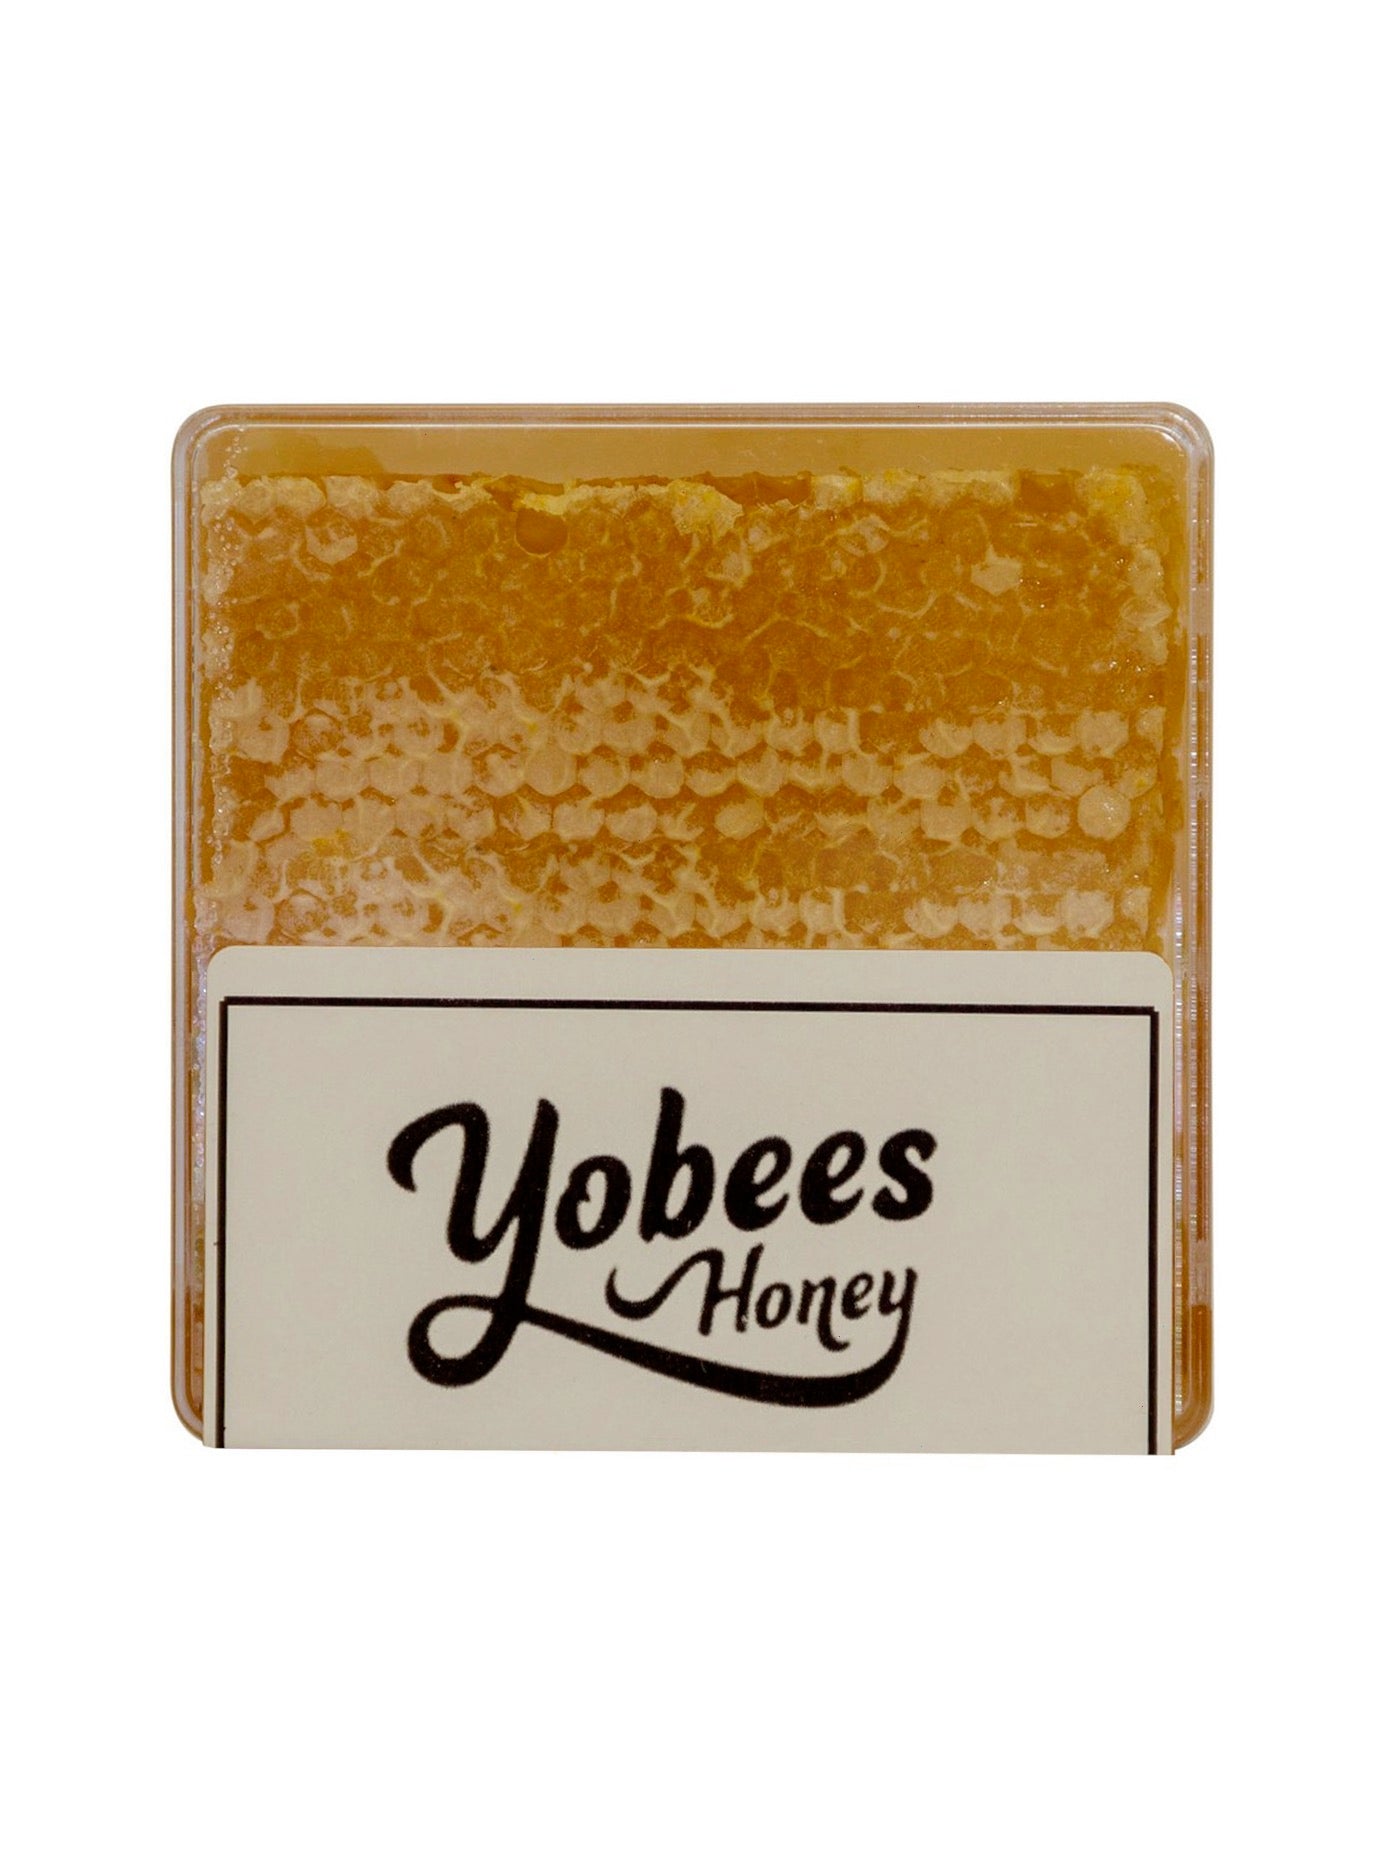 Comb Honey - 10oz  Hilbert's Honey Co.